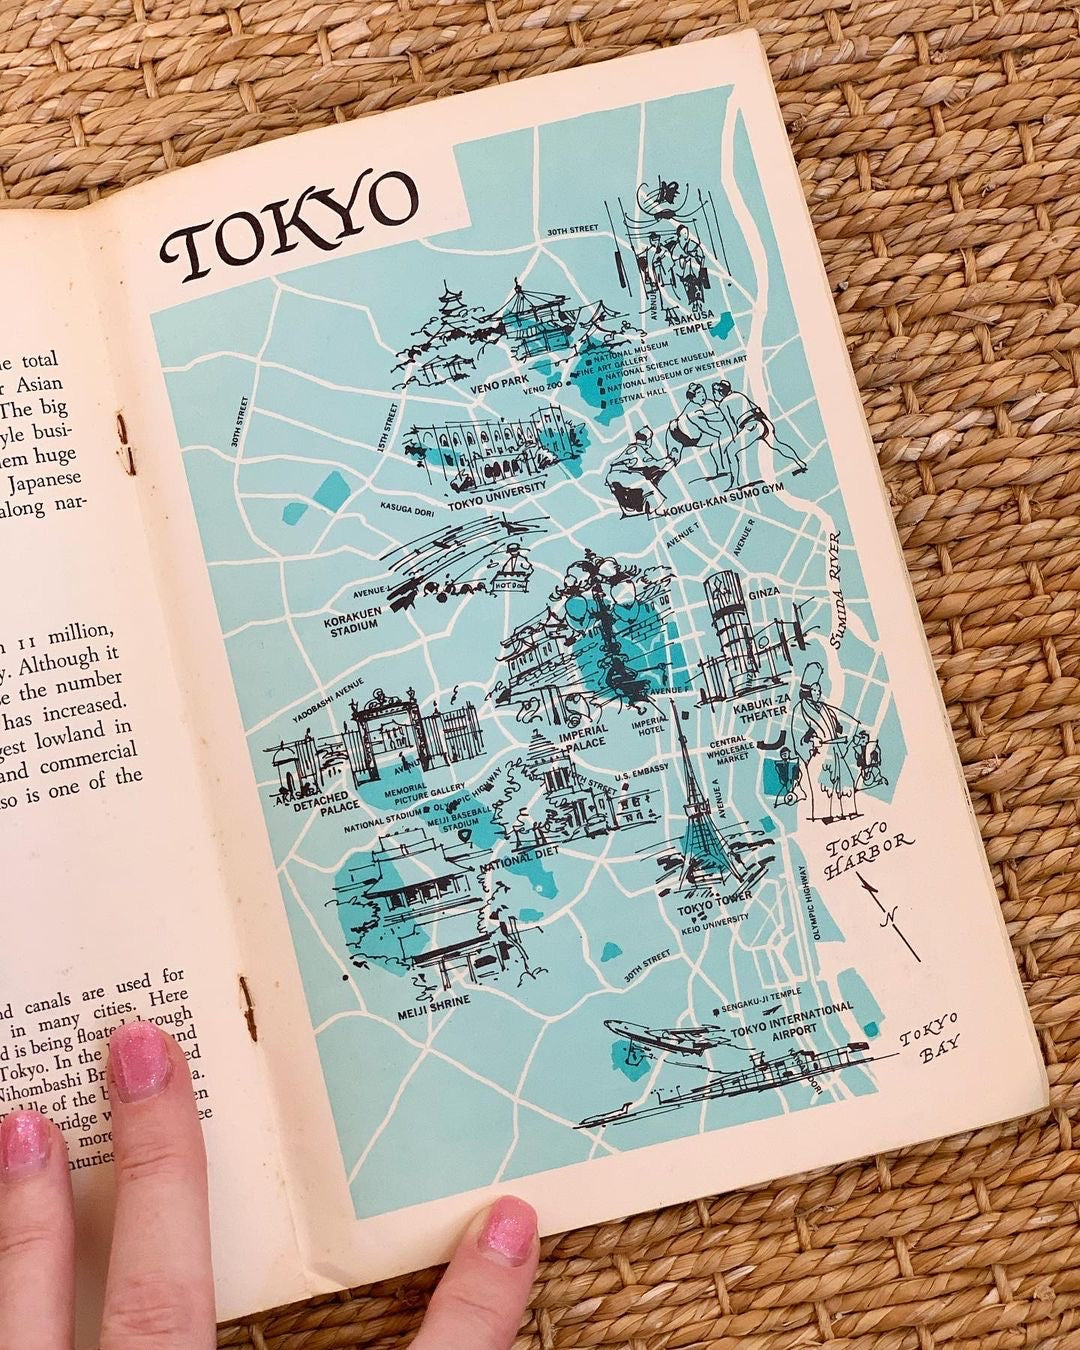 Japan Travel Book (1969)